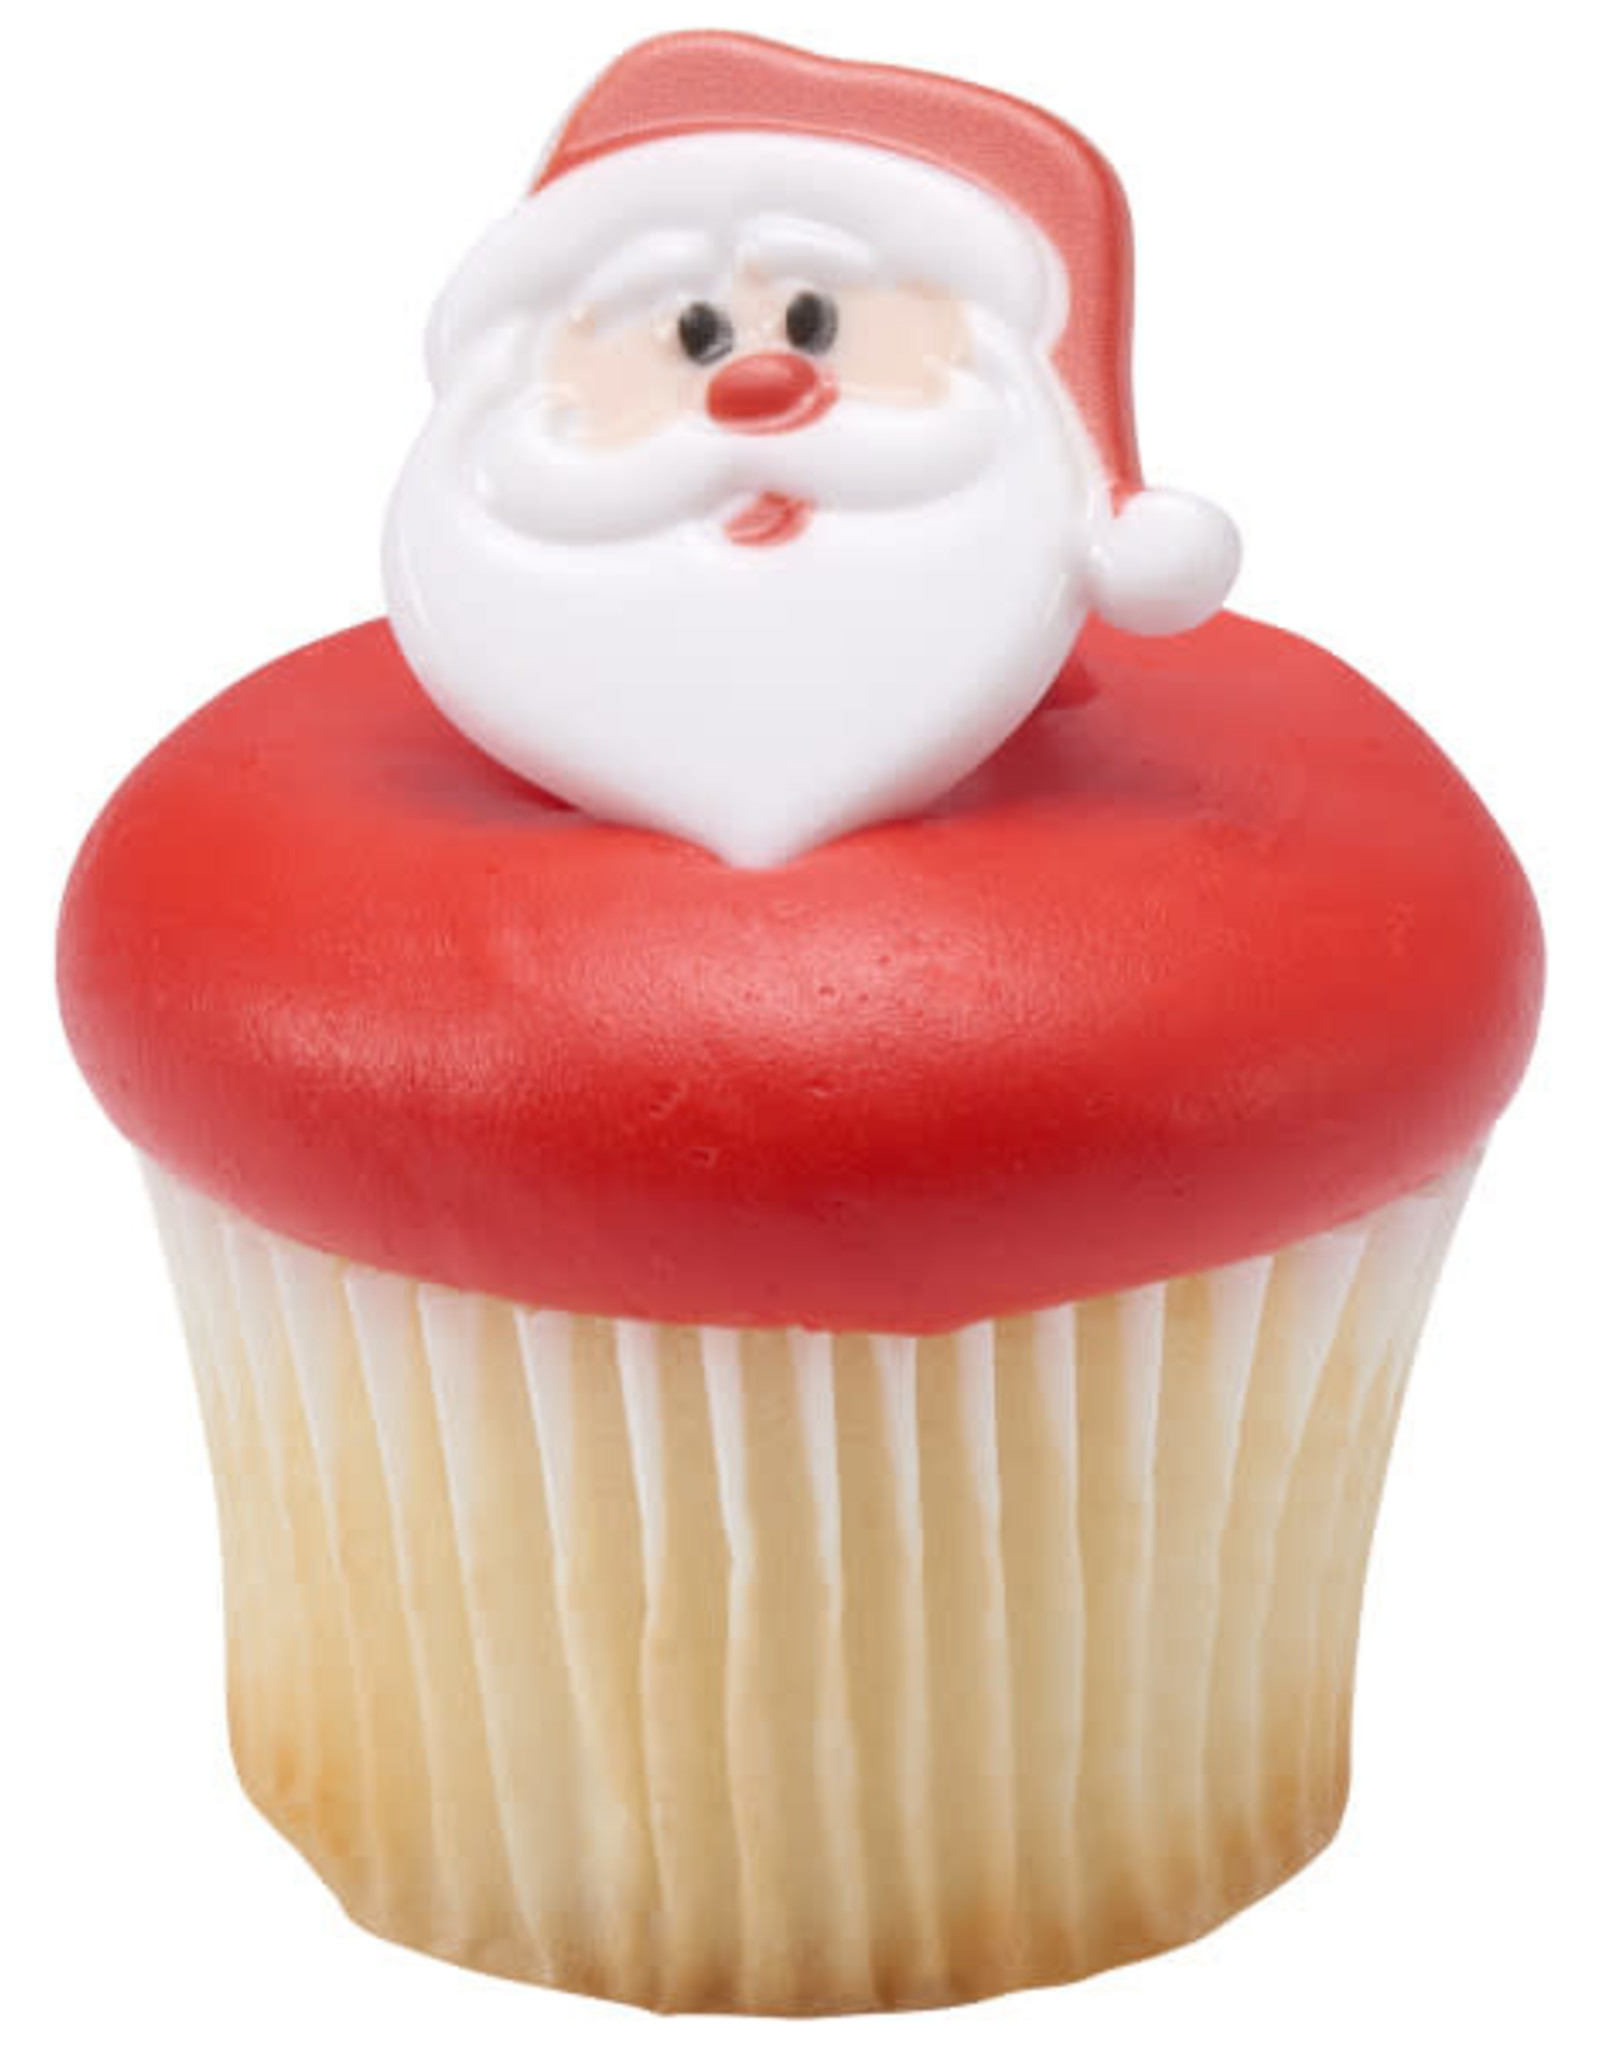 Santa Face CAKE | Cake, Holiday cakes, Custom cakes